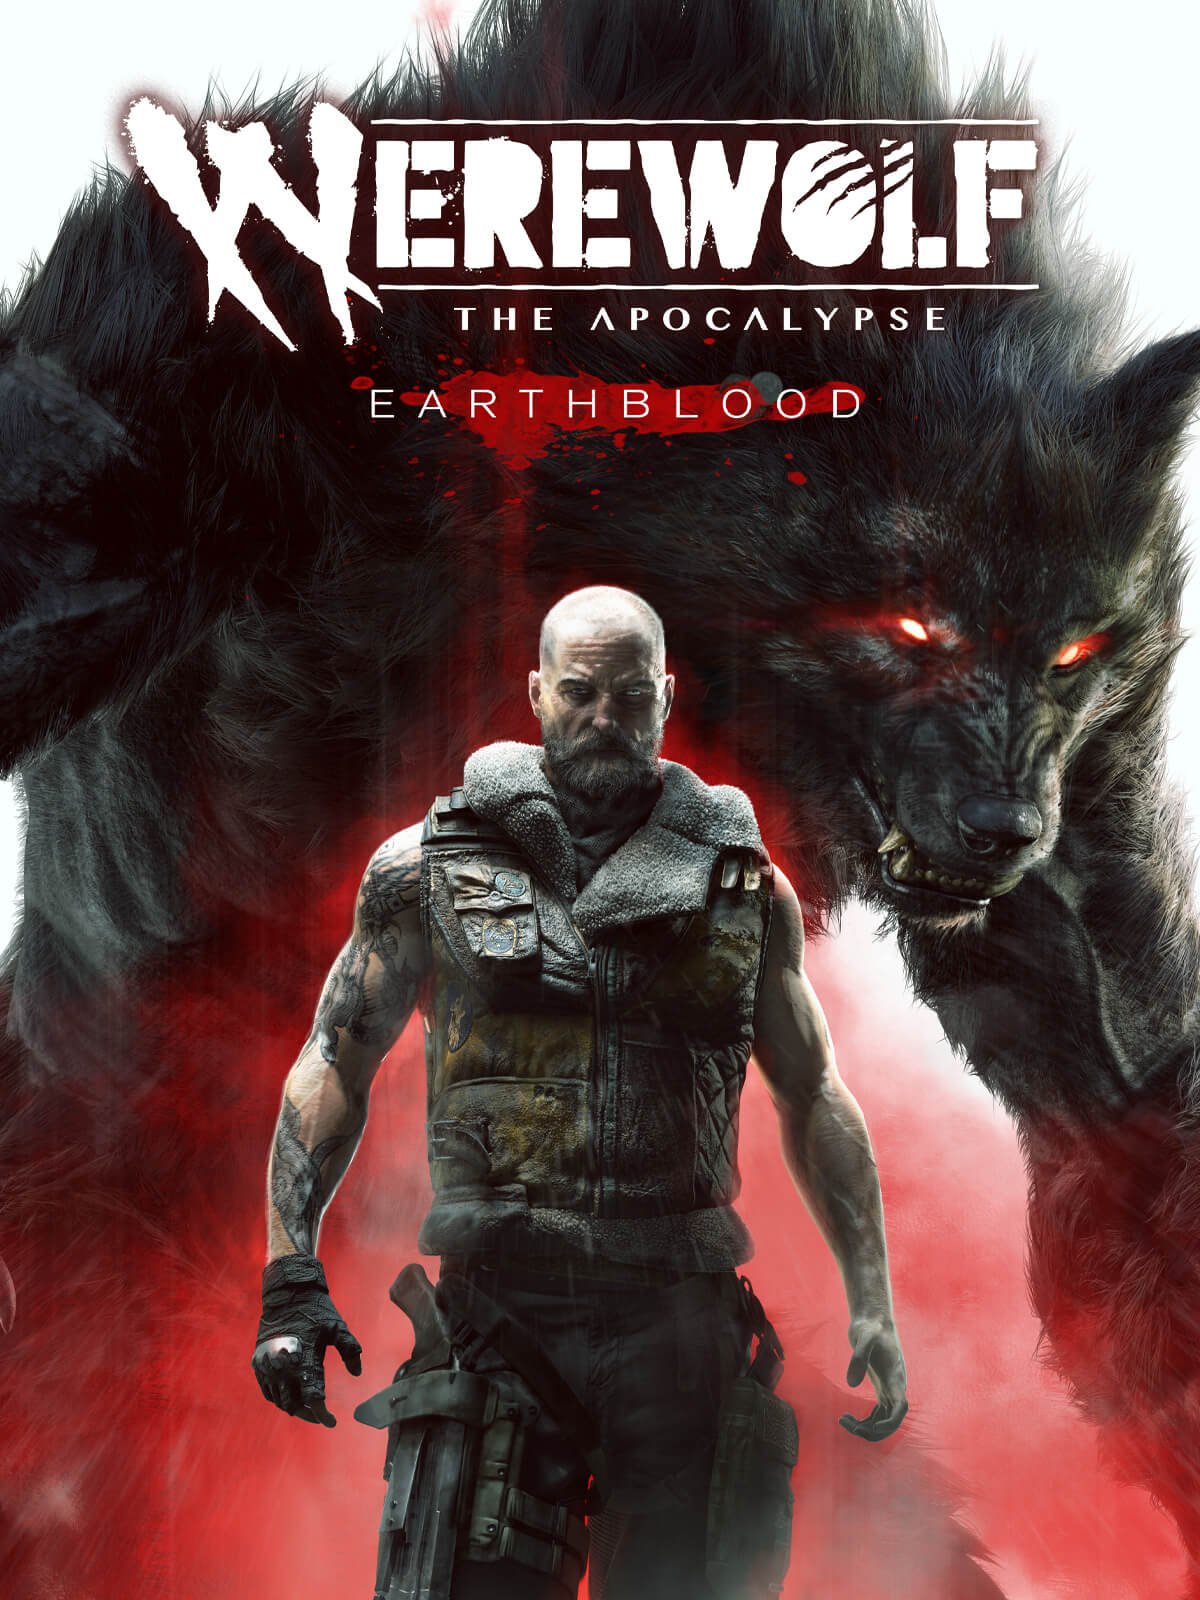 Werewolf The Apocalypse Earthblood [v 49091+DLC] (2021) RePack от xatab